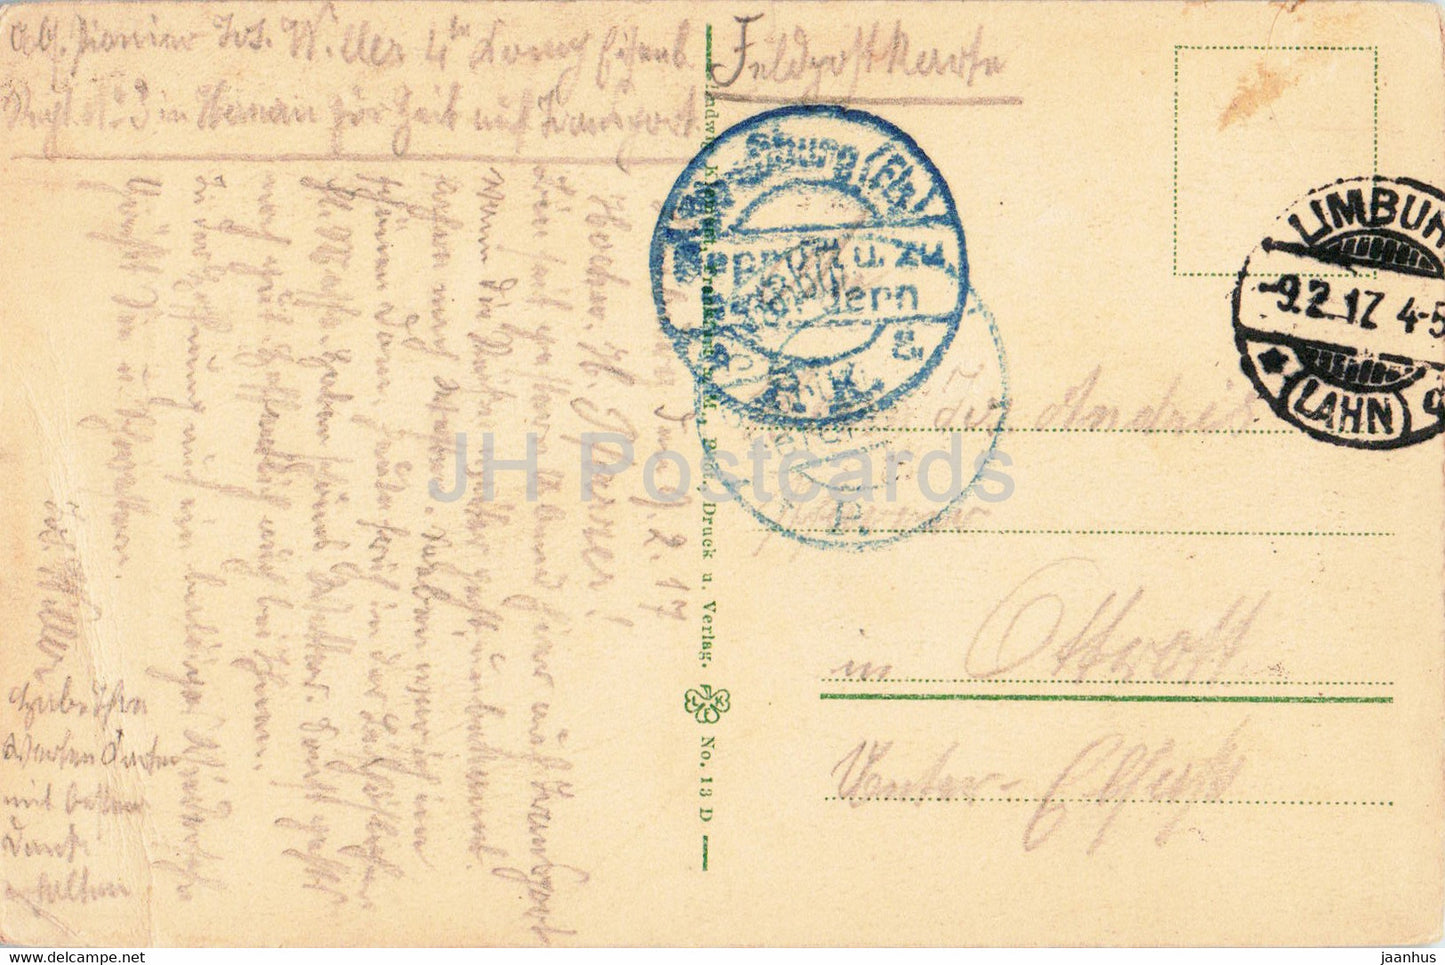 Limburg a L - Dom - Blick vom Querschiff zum Chor - cathedral - Feldpost - old postcard - 1917 - Germany - used